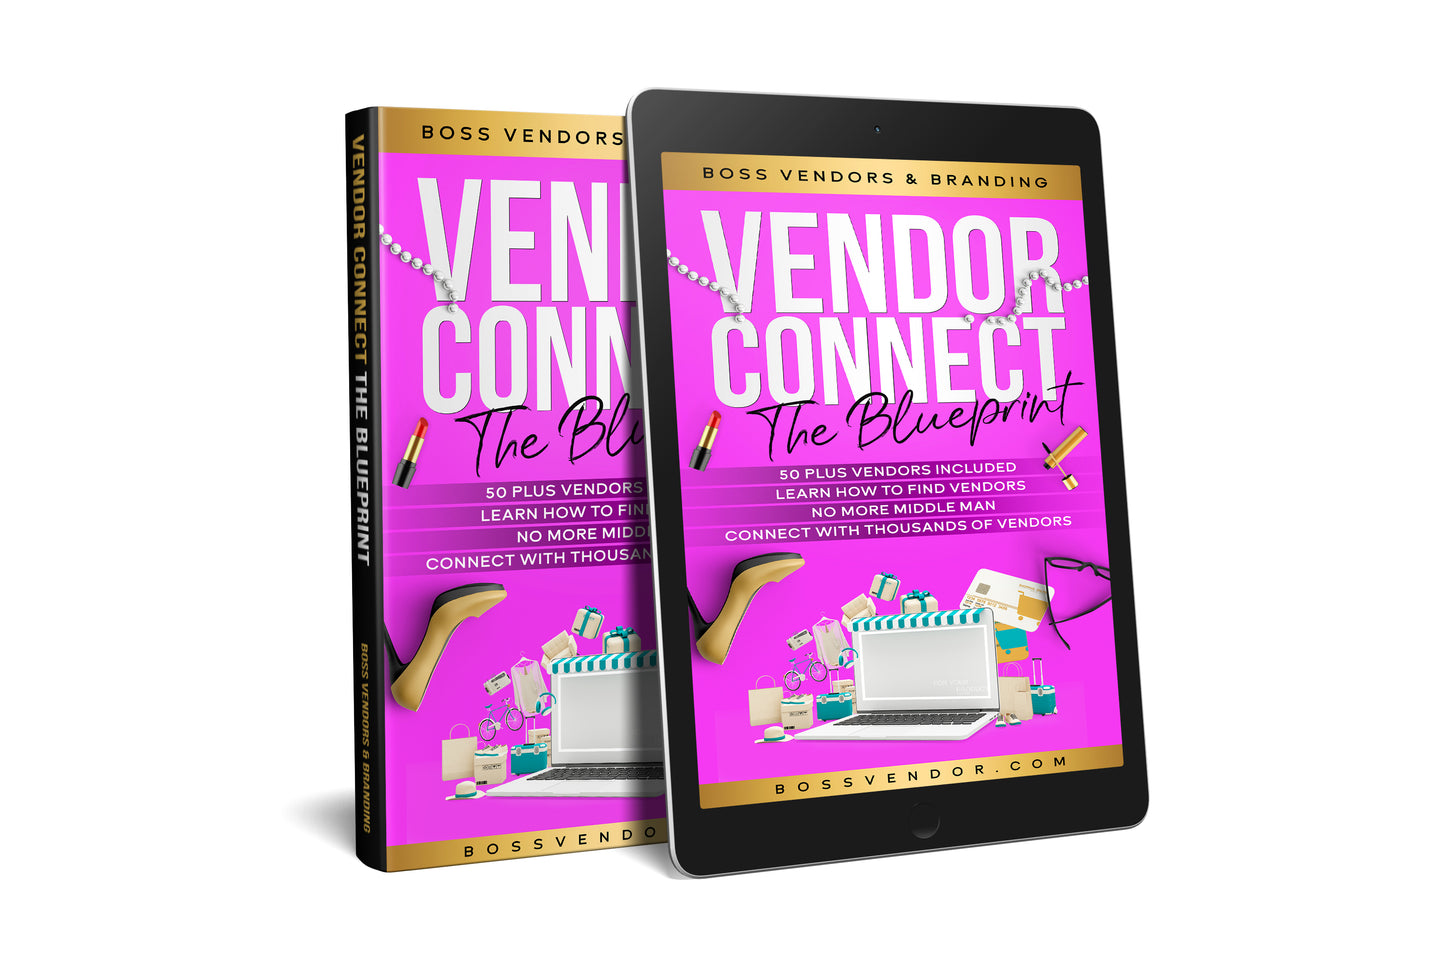 The Vendor Connect EBook - Over 50 Vendors